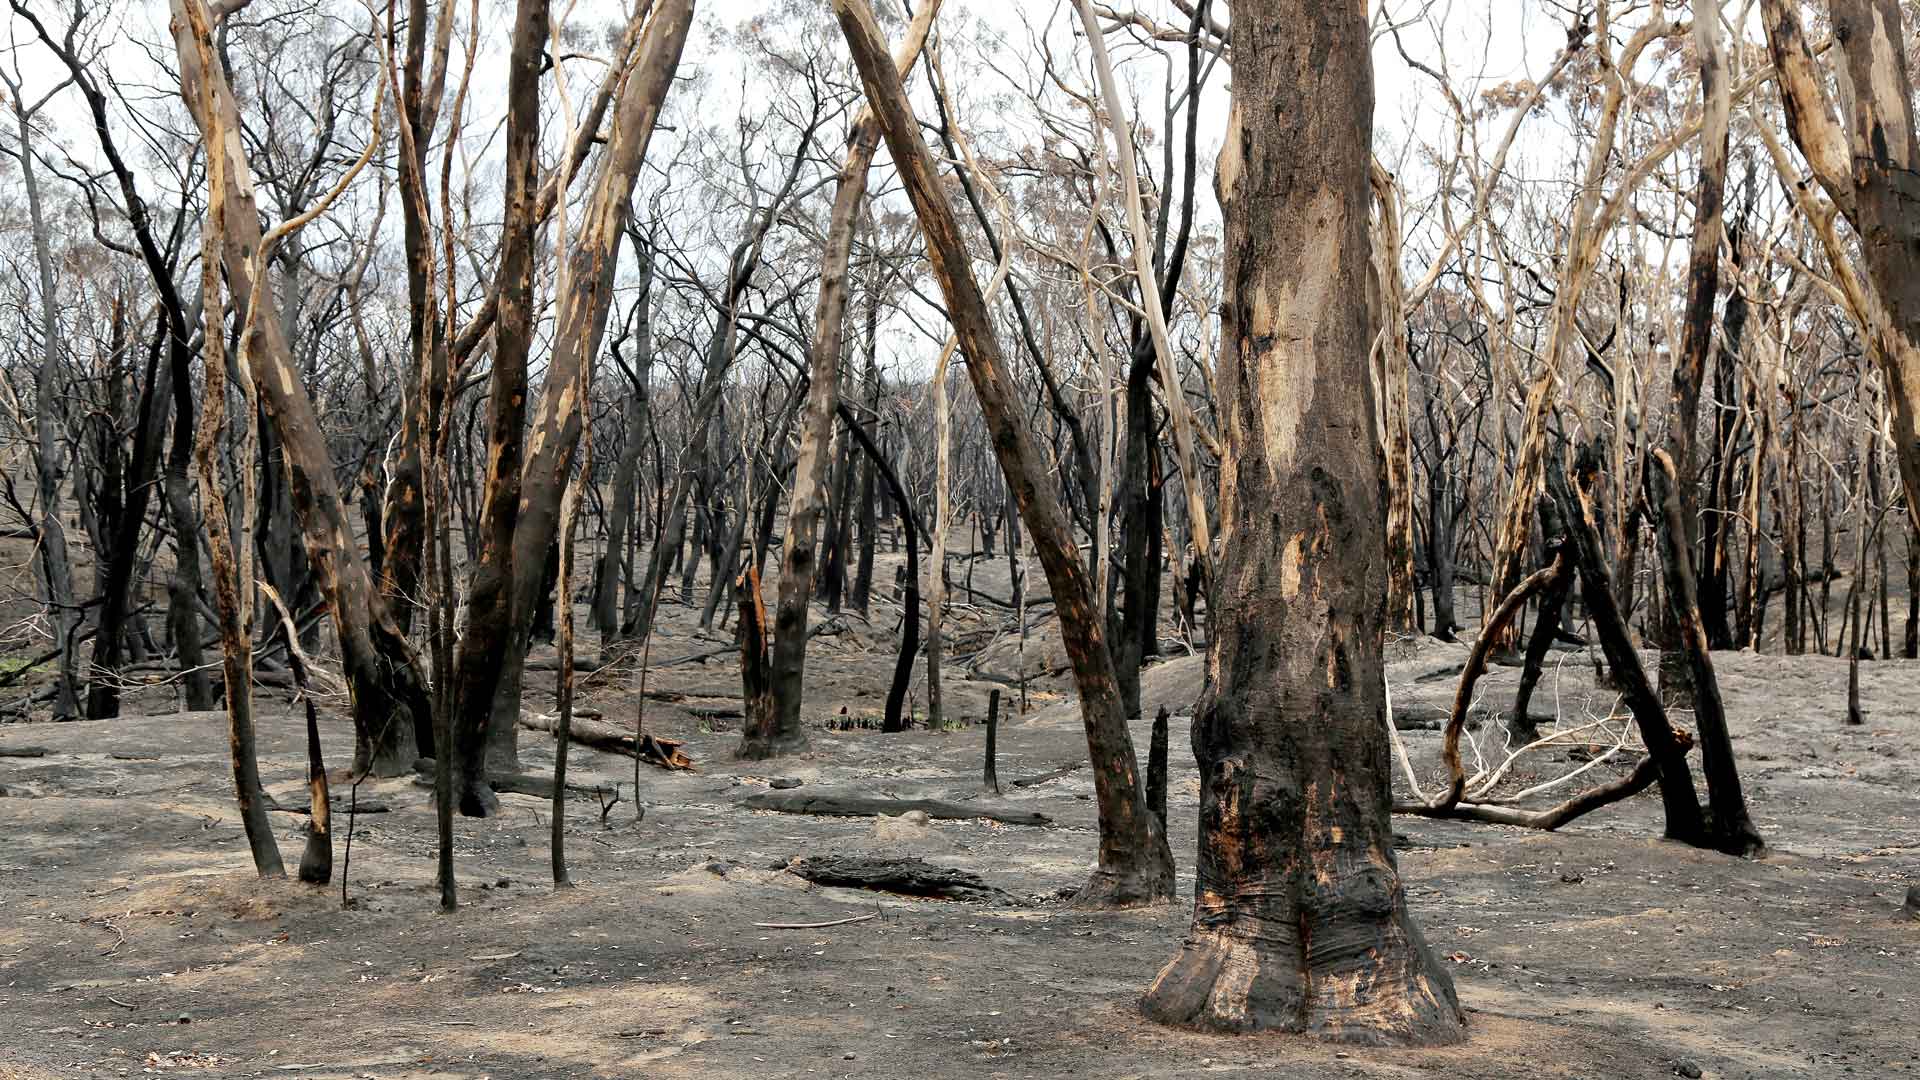 The burned landscape of Kangaroo Island in South Australia. January 2020, Australian Red Cross/Aysha Leo.